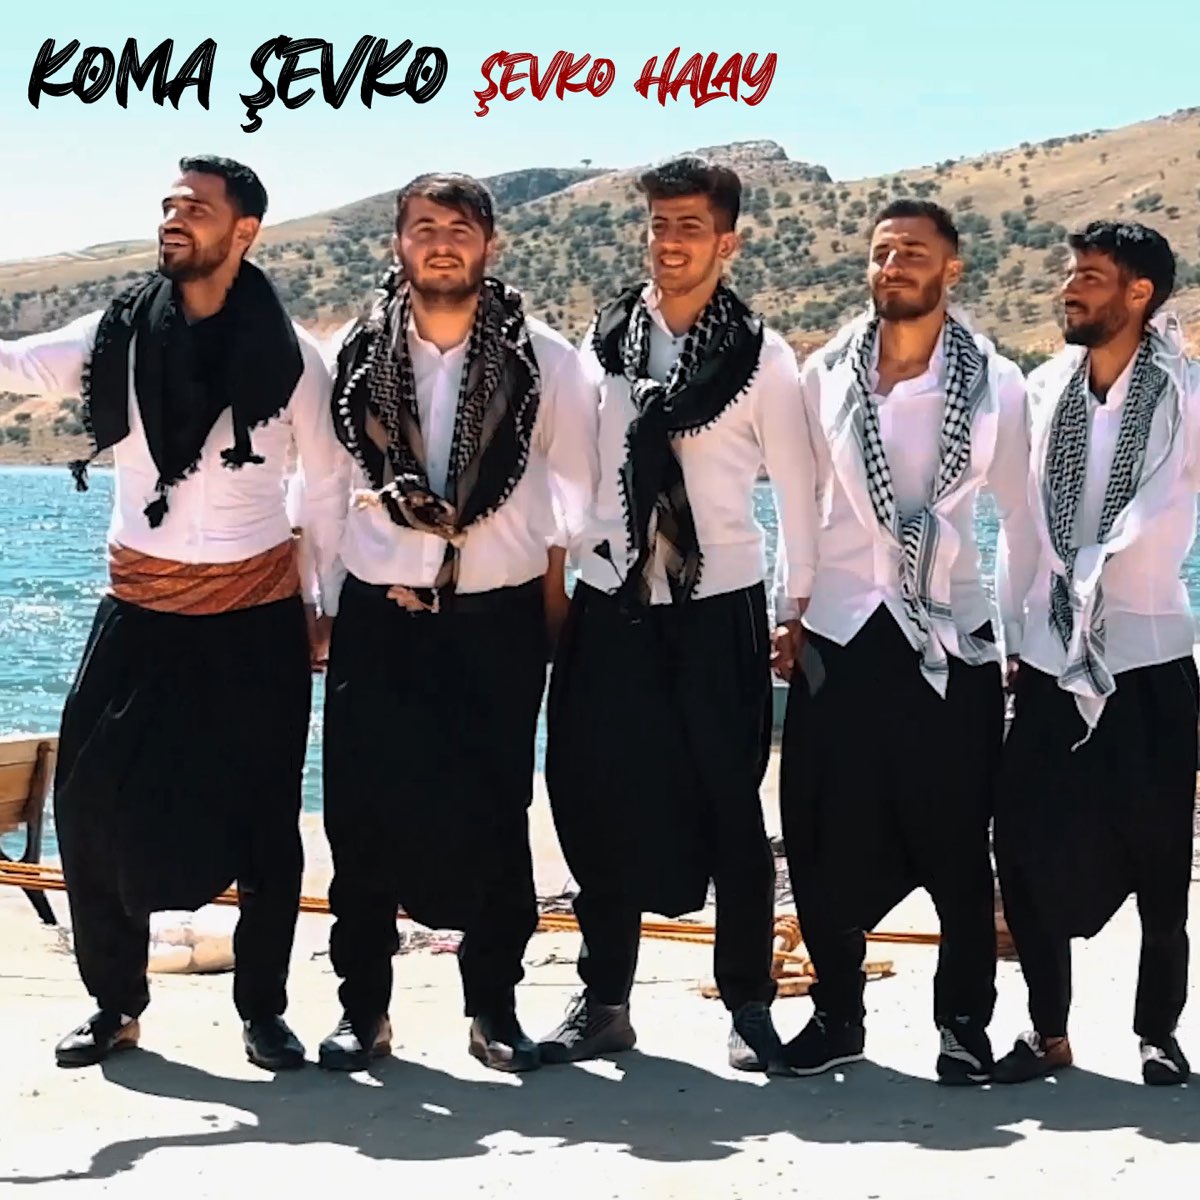 Şevko Halay - Single - Album by Koma Şevko - Apple Music